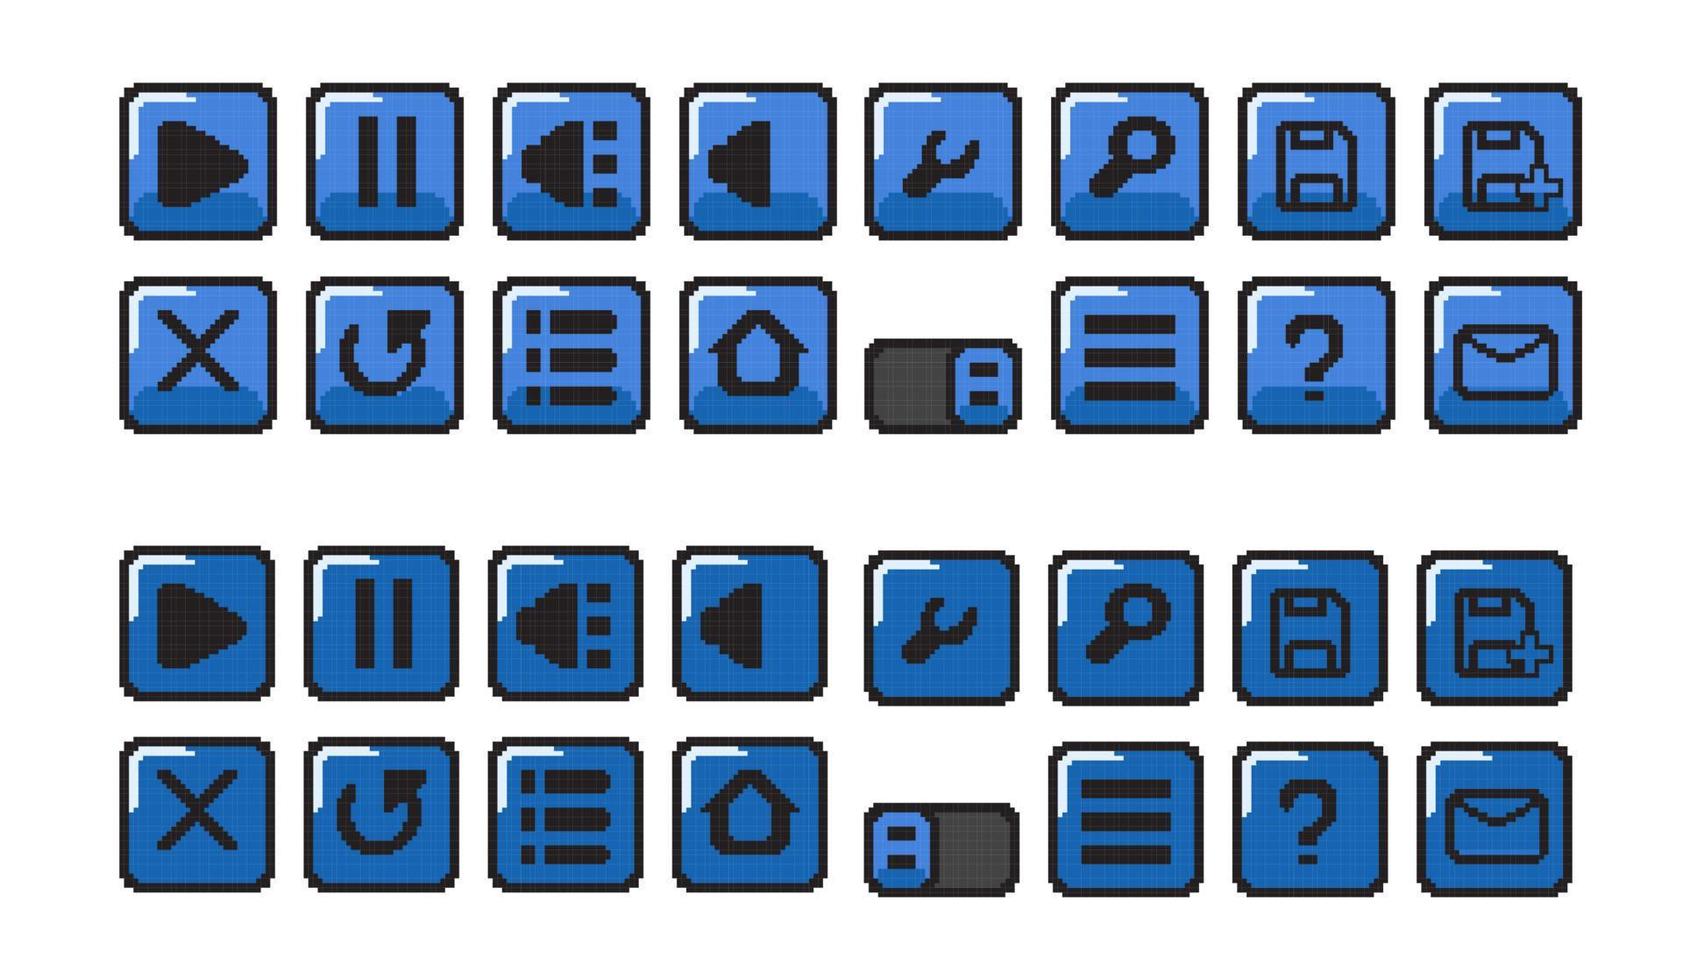 bleu bouton ensemble dans pixel art style vecteur